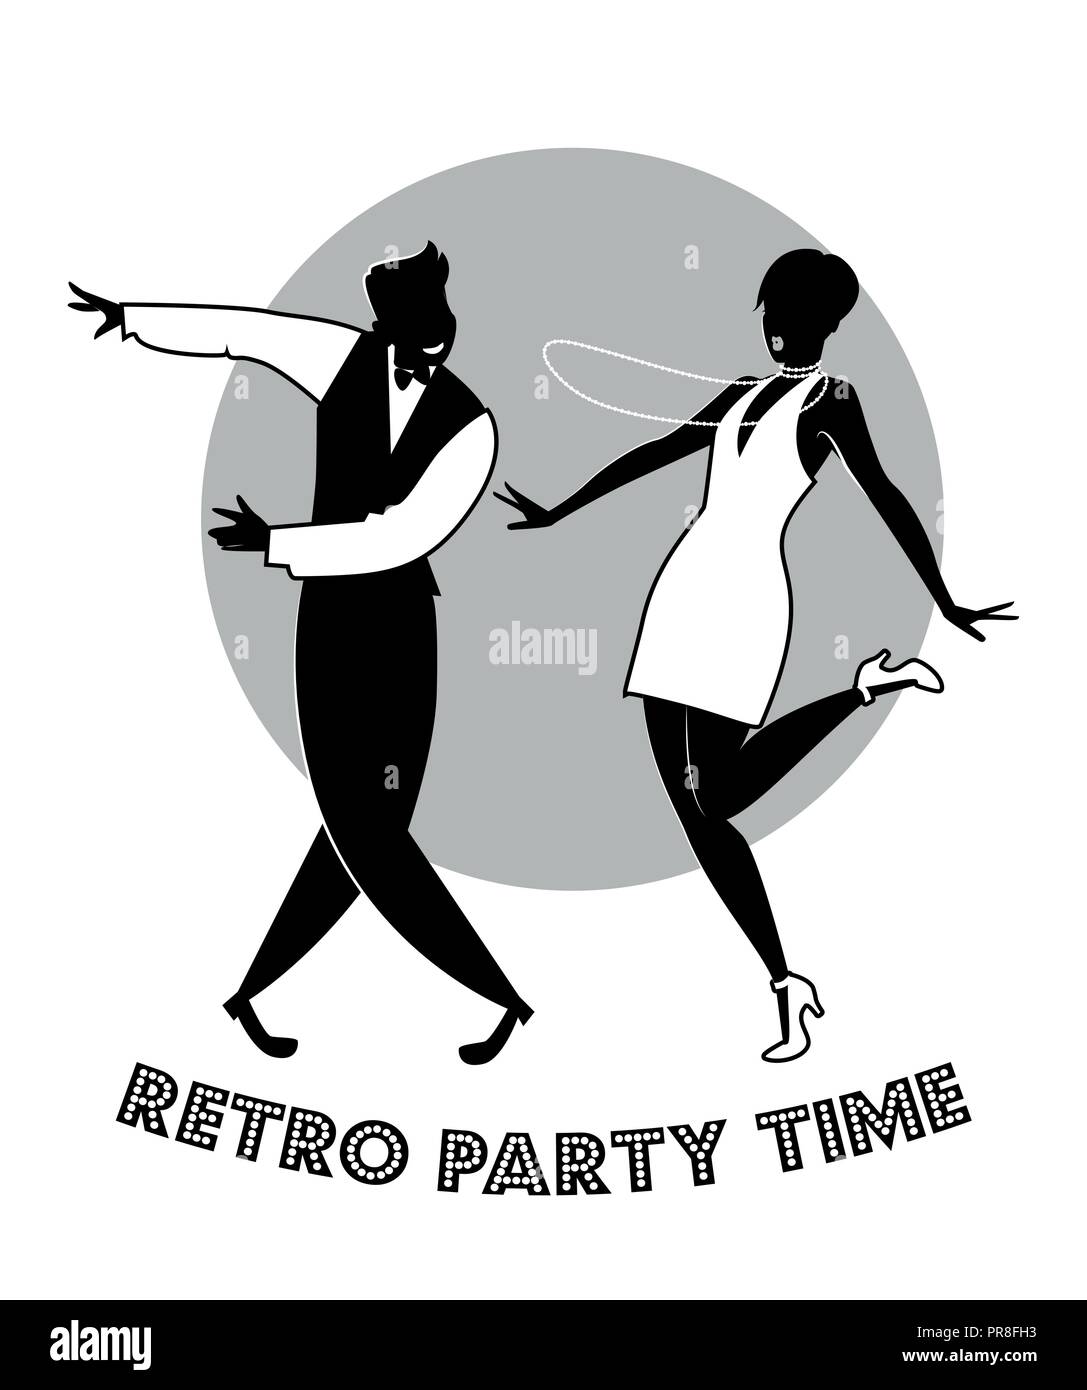 Funny couple dancing charleston. Cartoon retro style Stock Vector